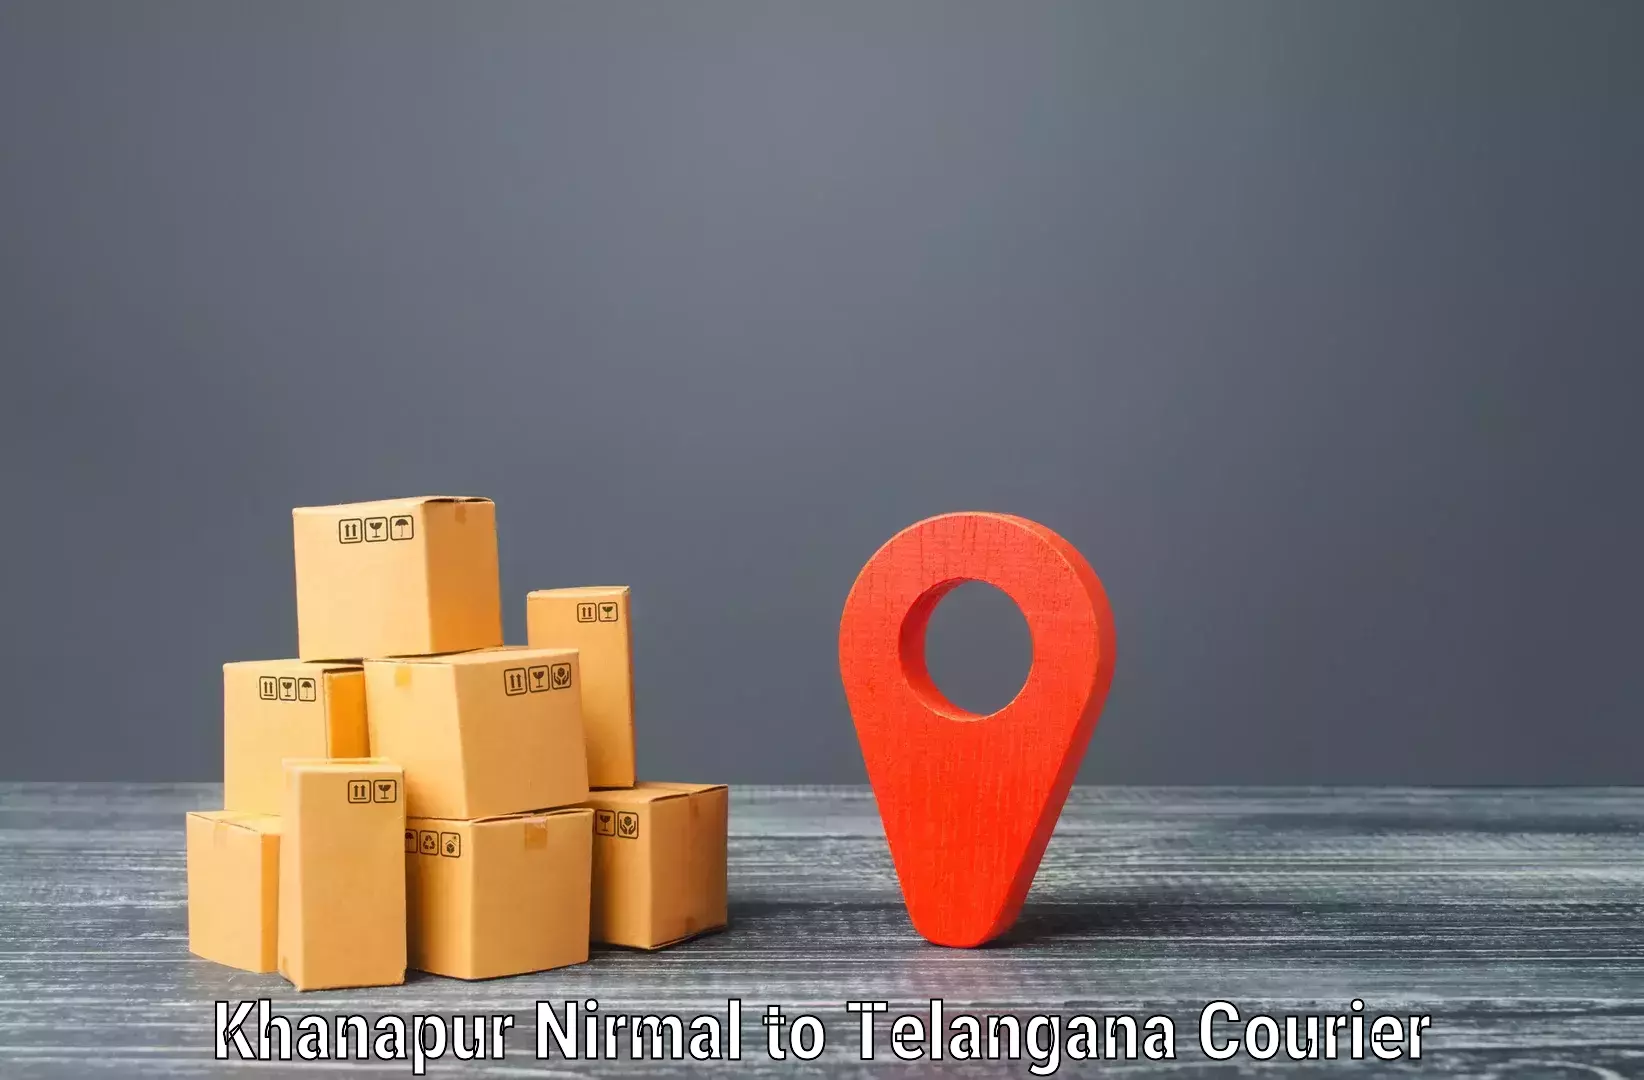 High-performance logistics in Khanapur Nirmal to Pathipaka